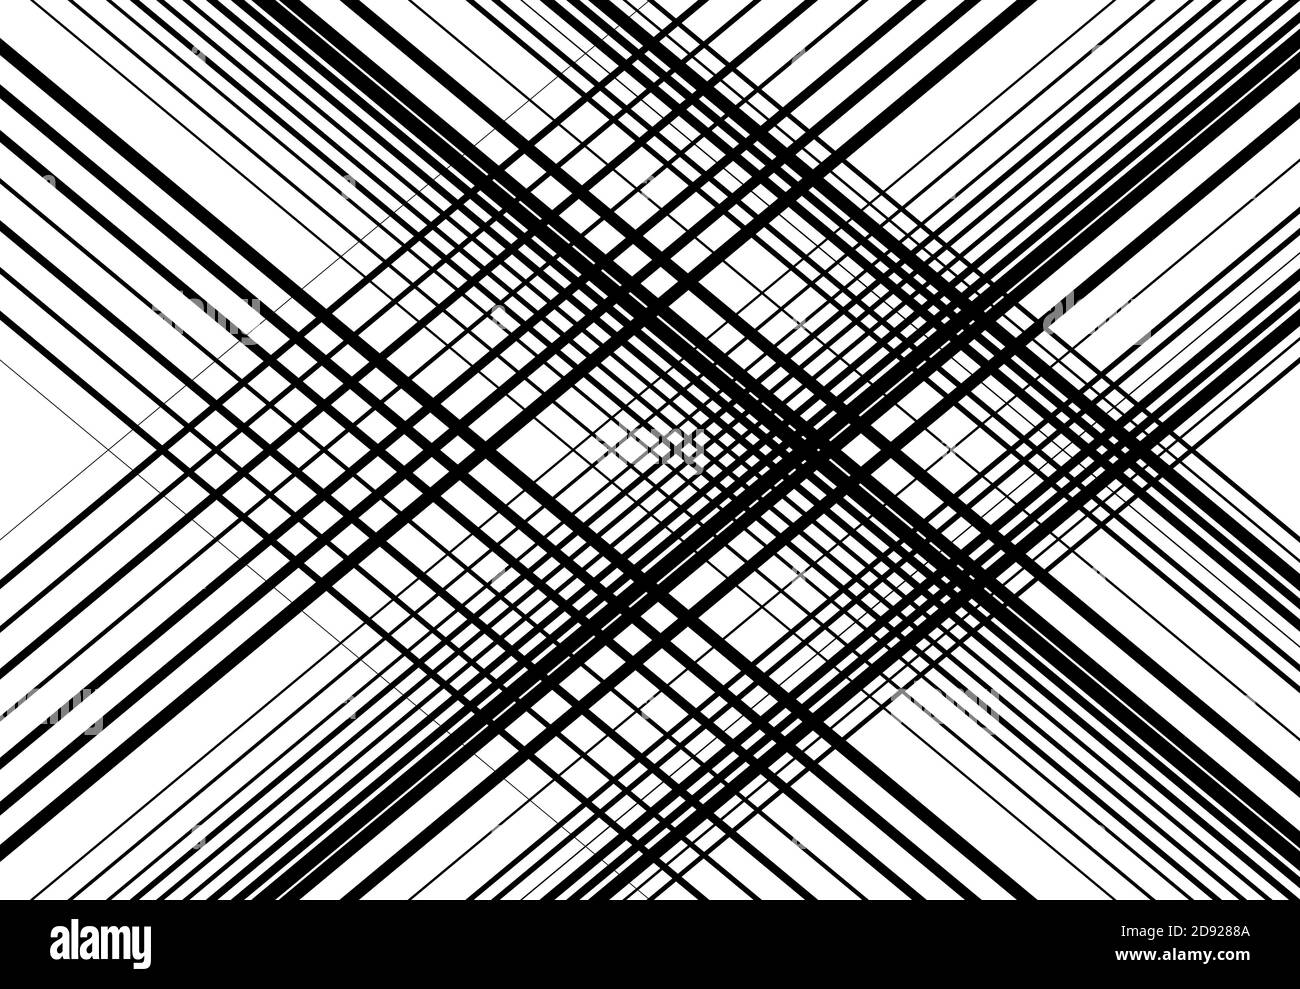 Network grid, mesh. Lattice, grating, trellis pattern, background and ...